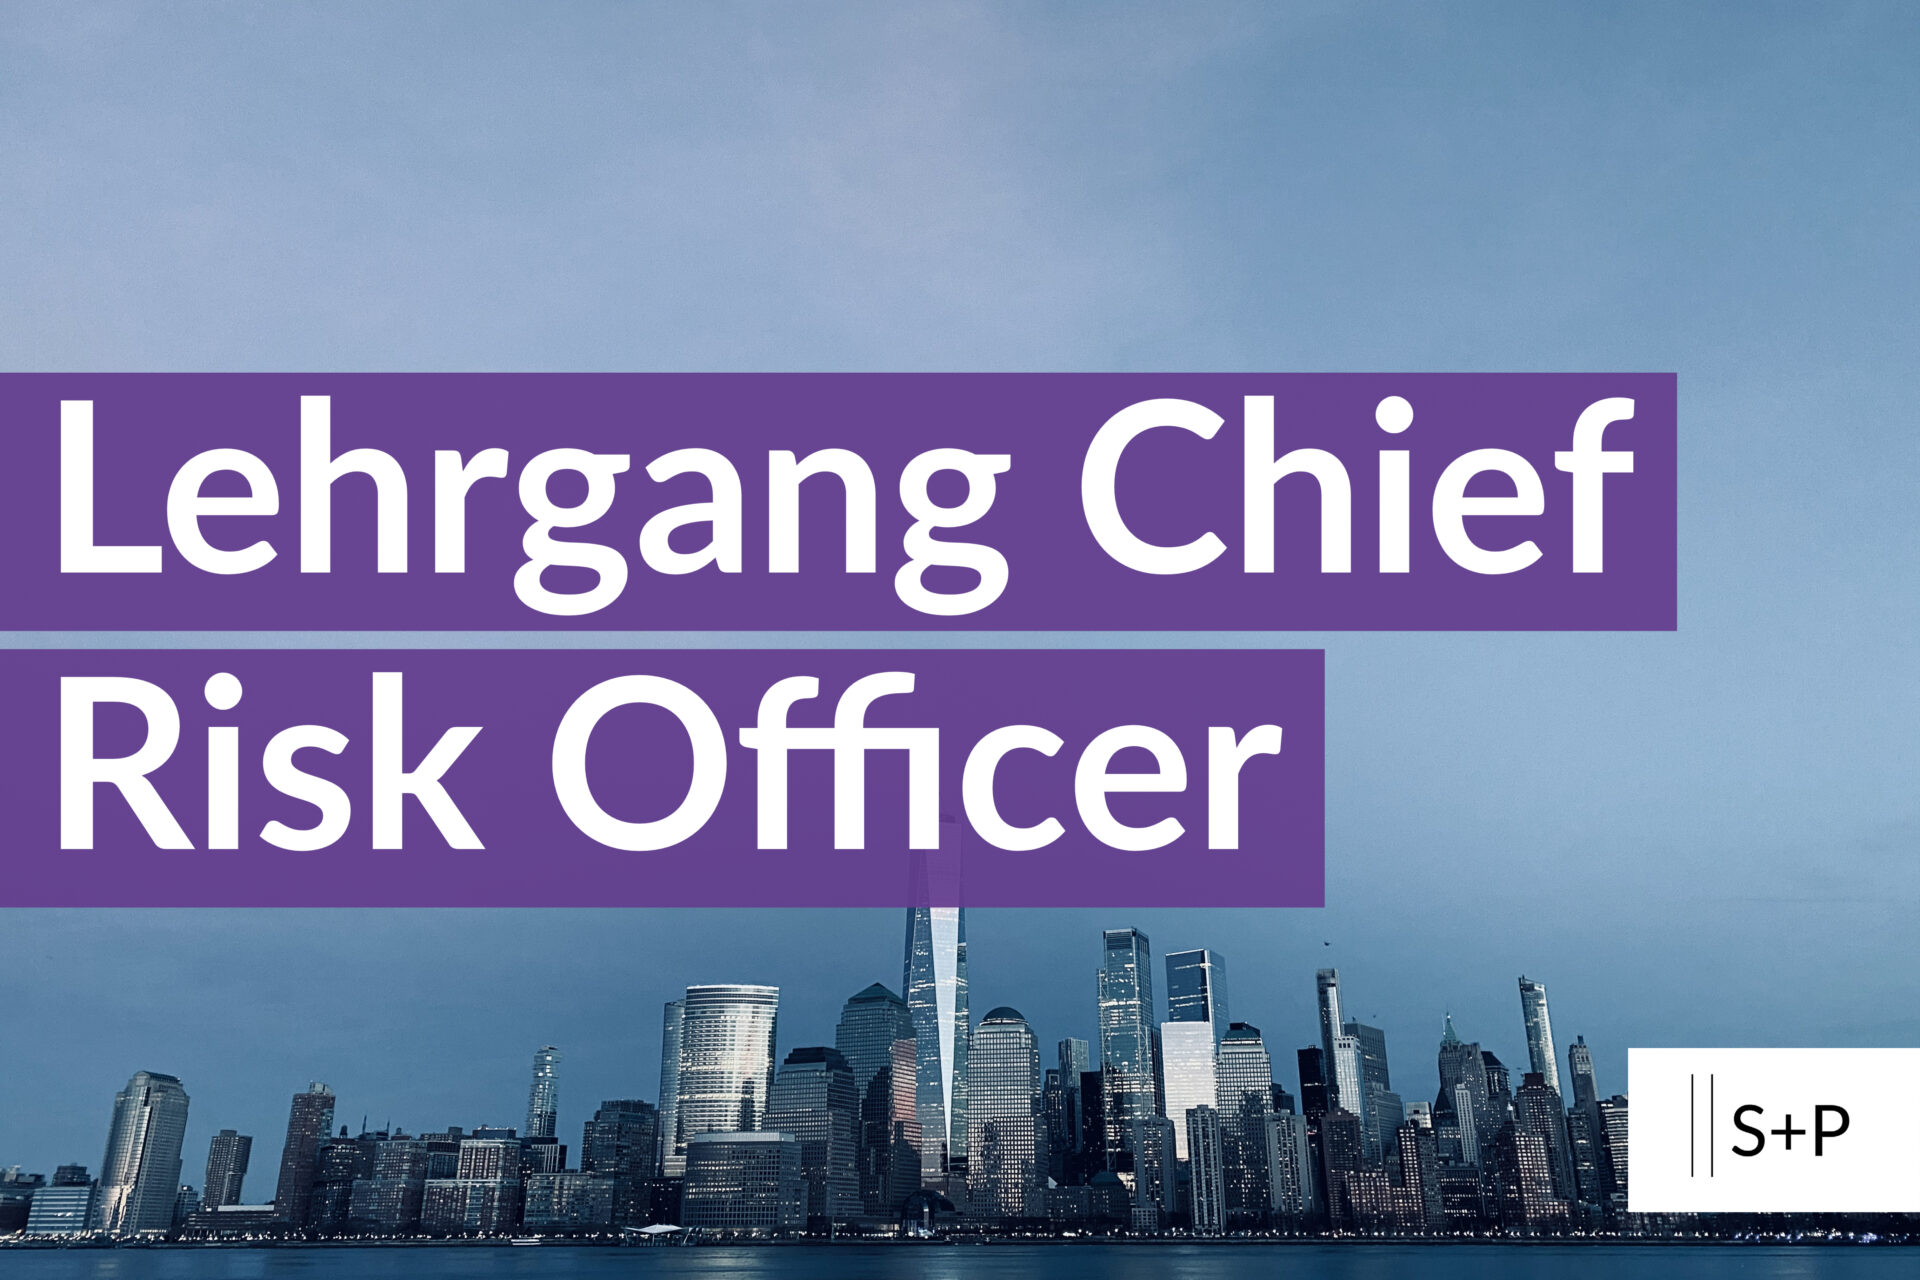 Lehrgang Chief Risk Officer